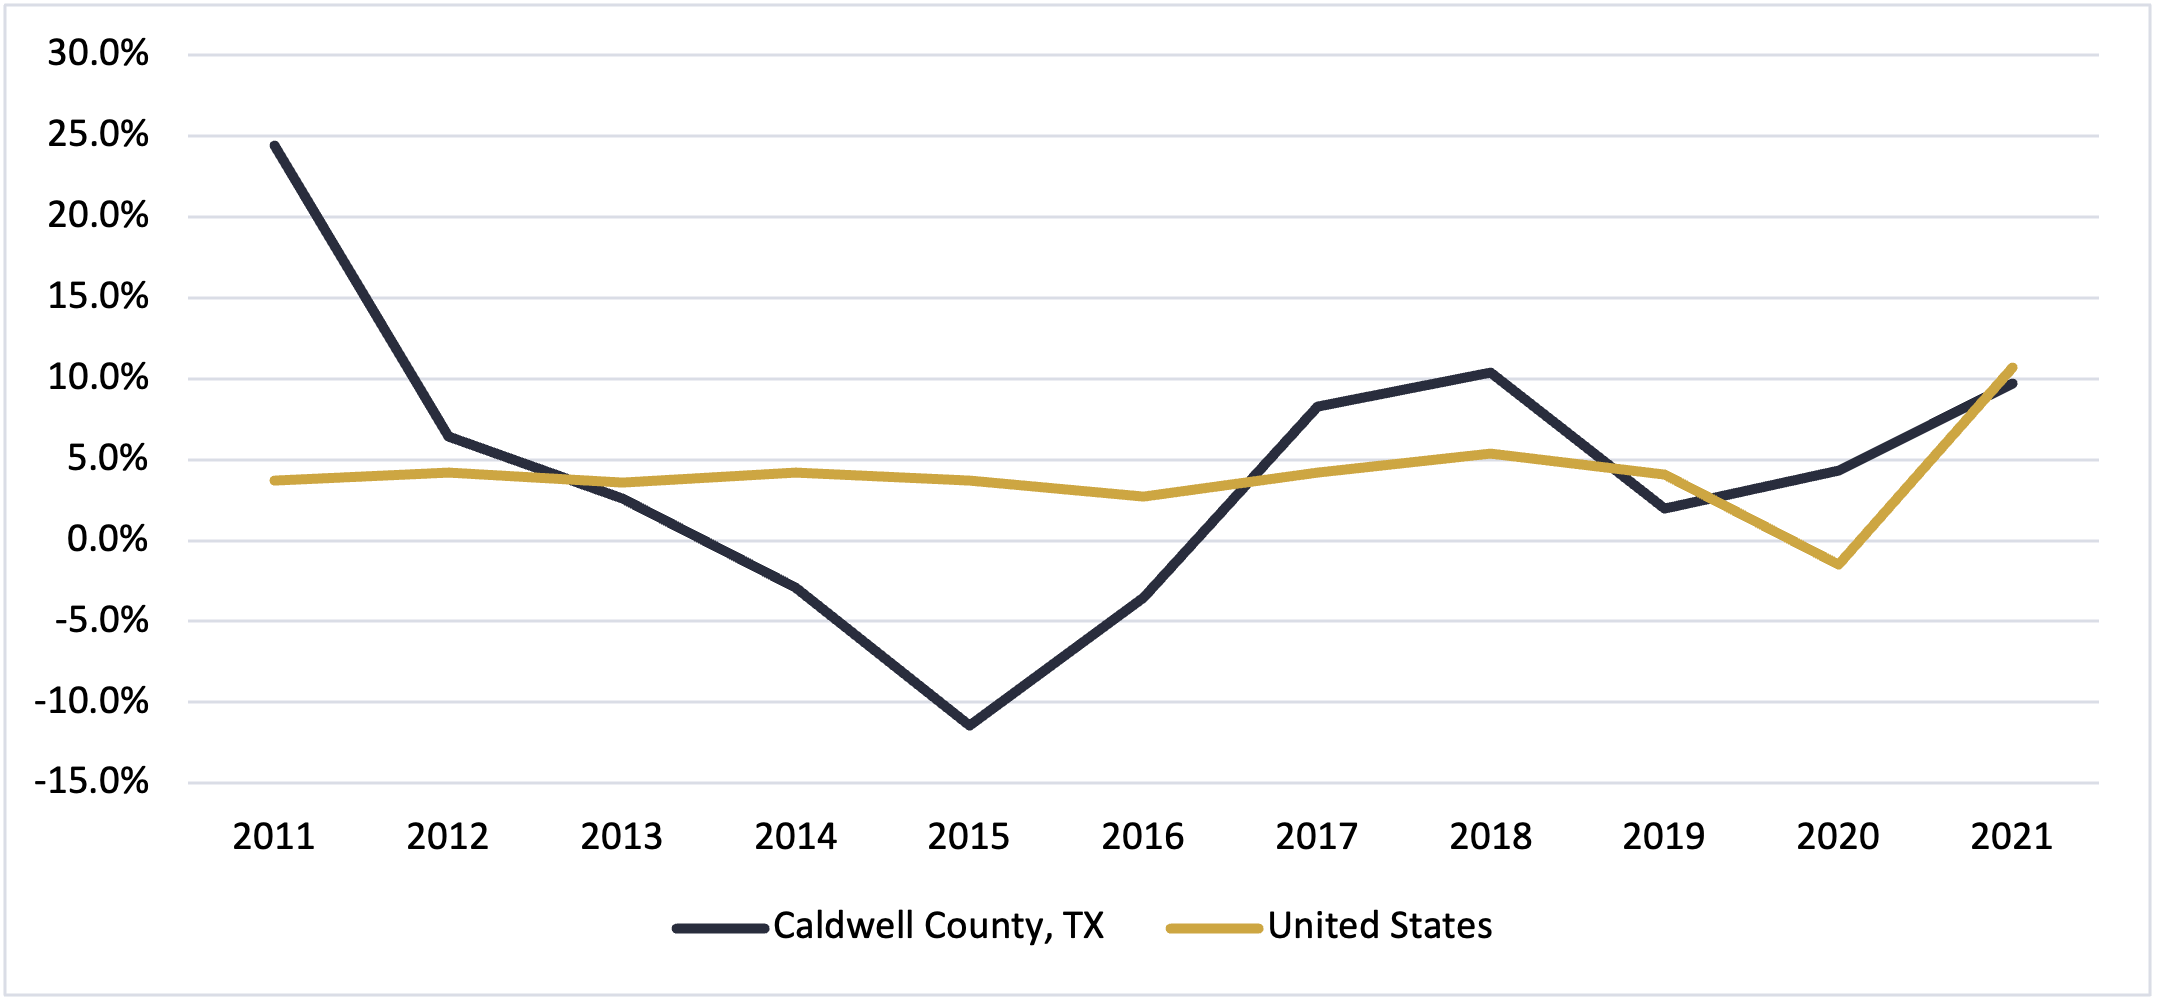 Caldwell County Texas Groos Regional Product Growth 2021